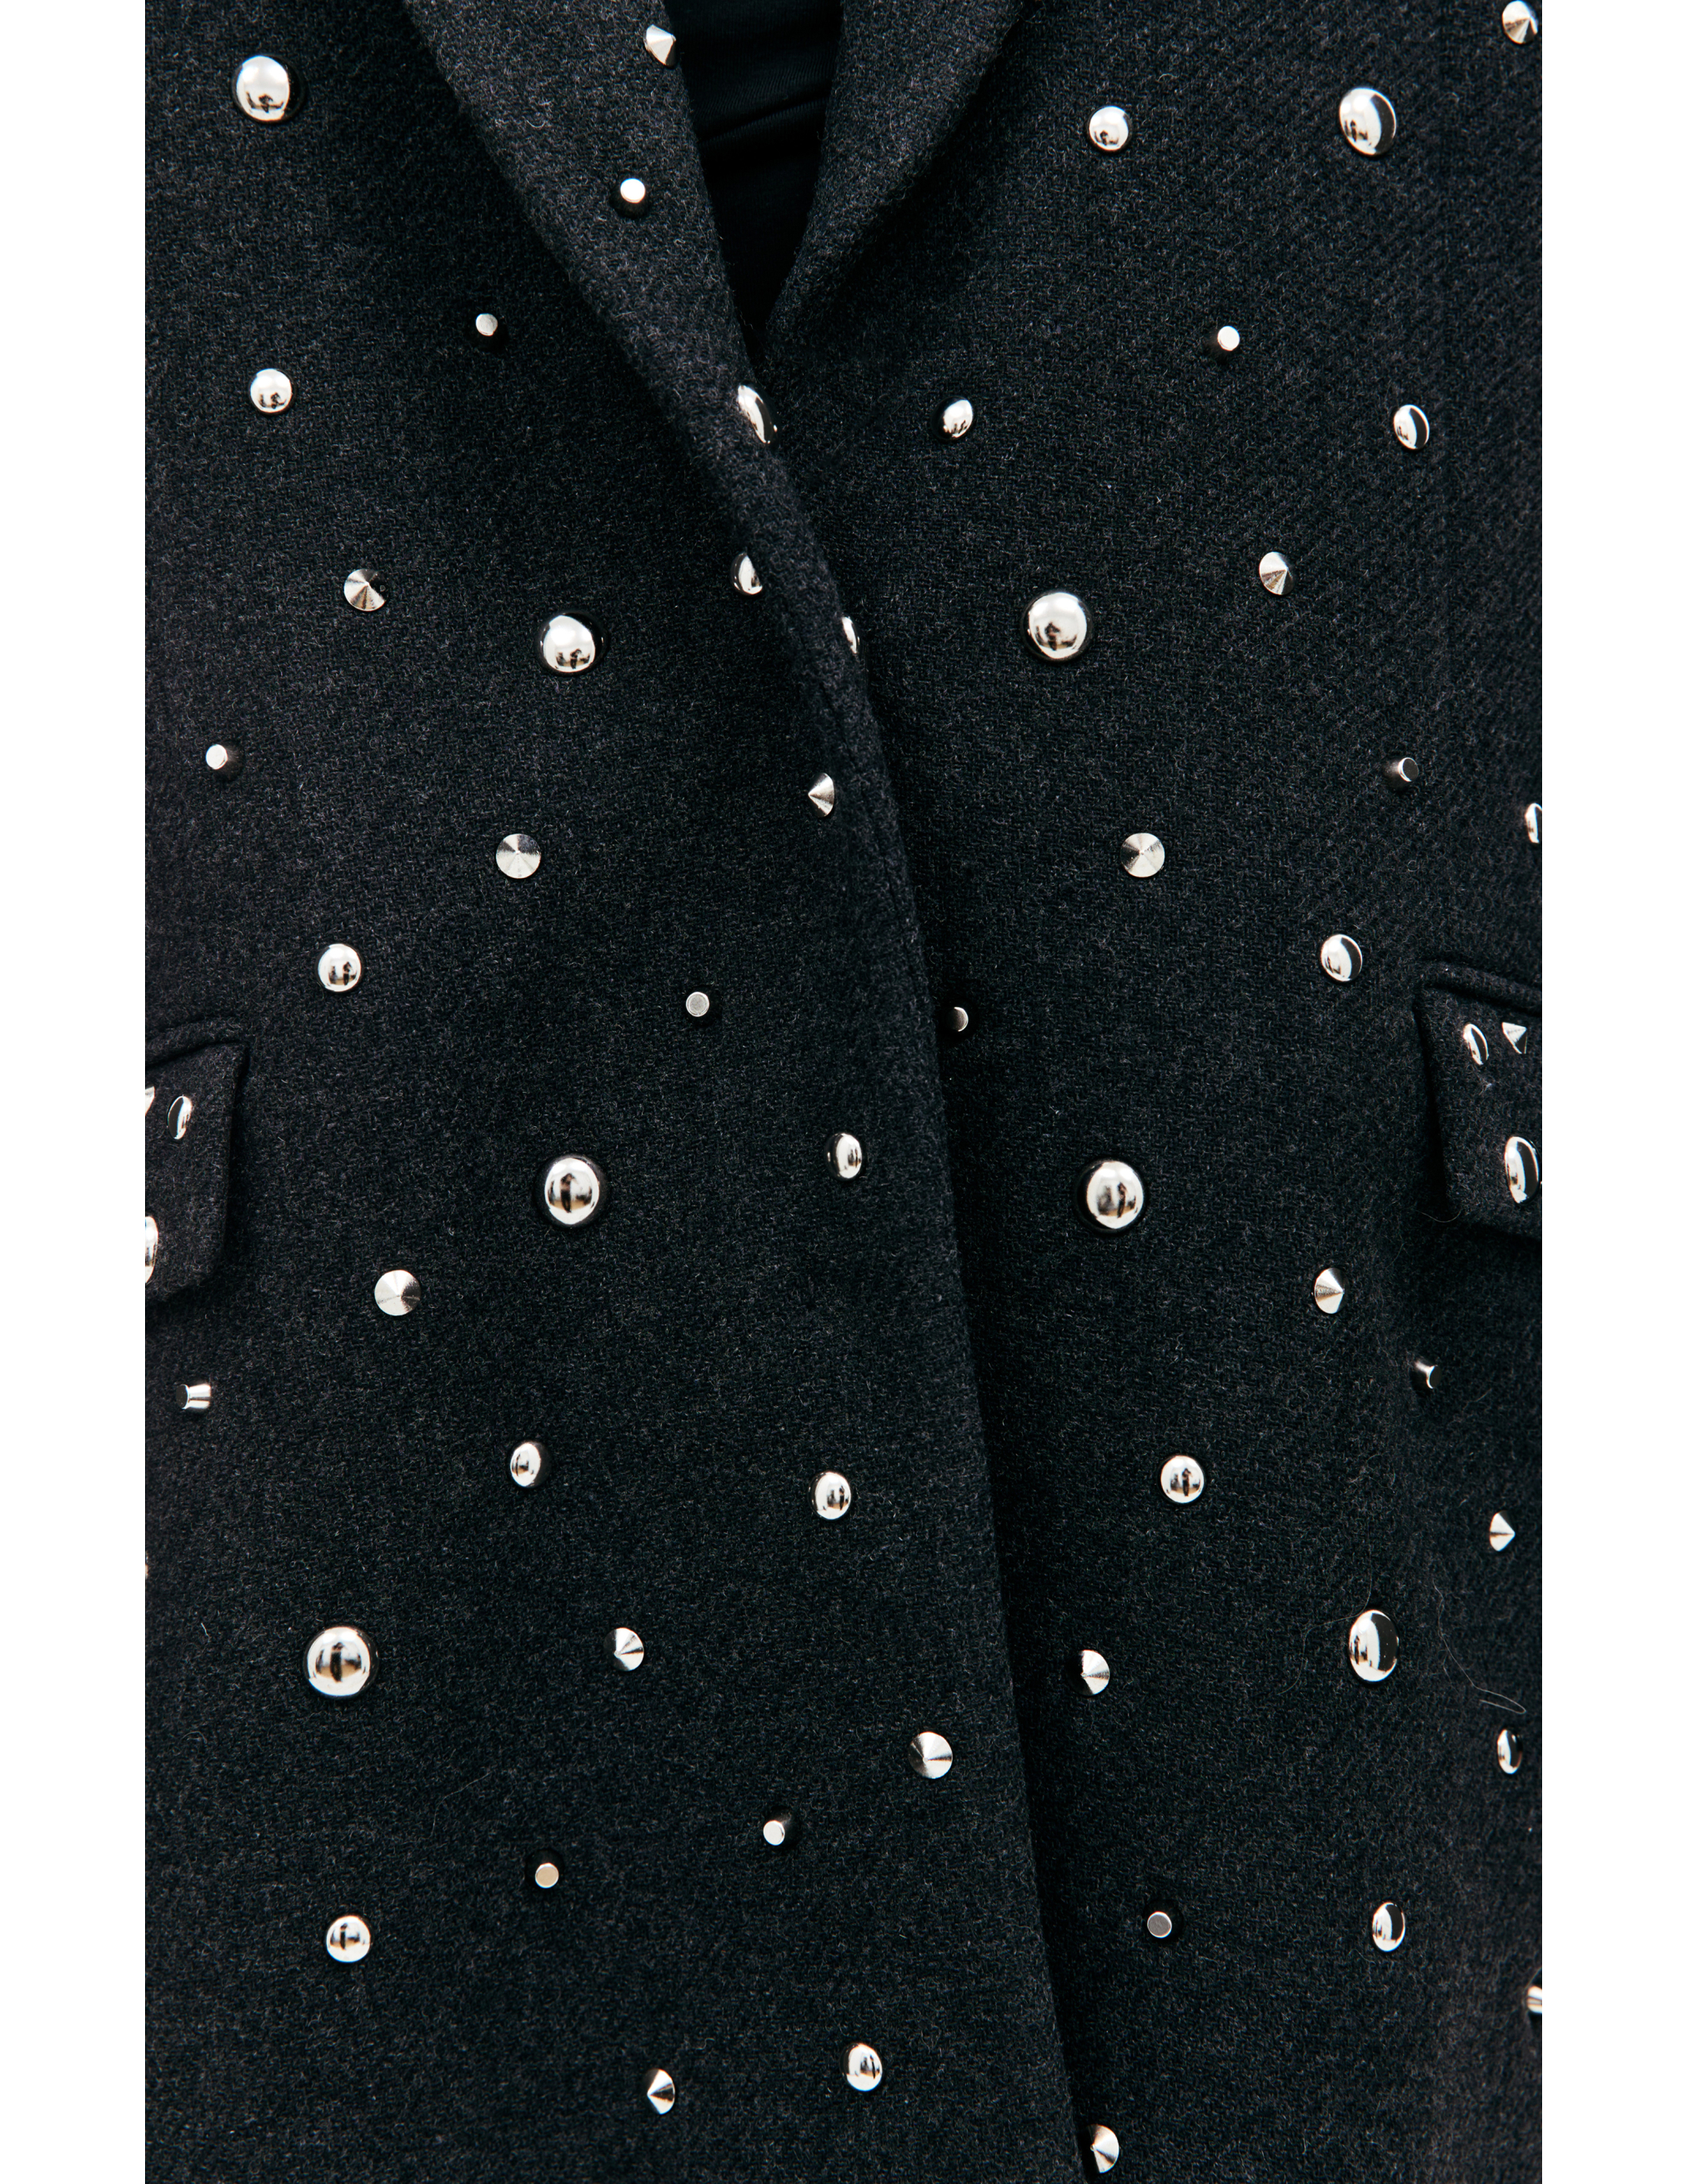 Шерстяной пиджак с металлическими клепками Blumarine A34/4S006A/N0936, размер 40 A34/4S006A/N0936 - фото 5